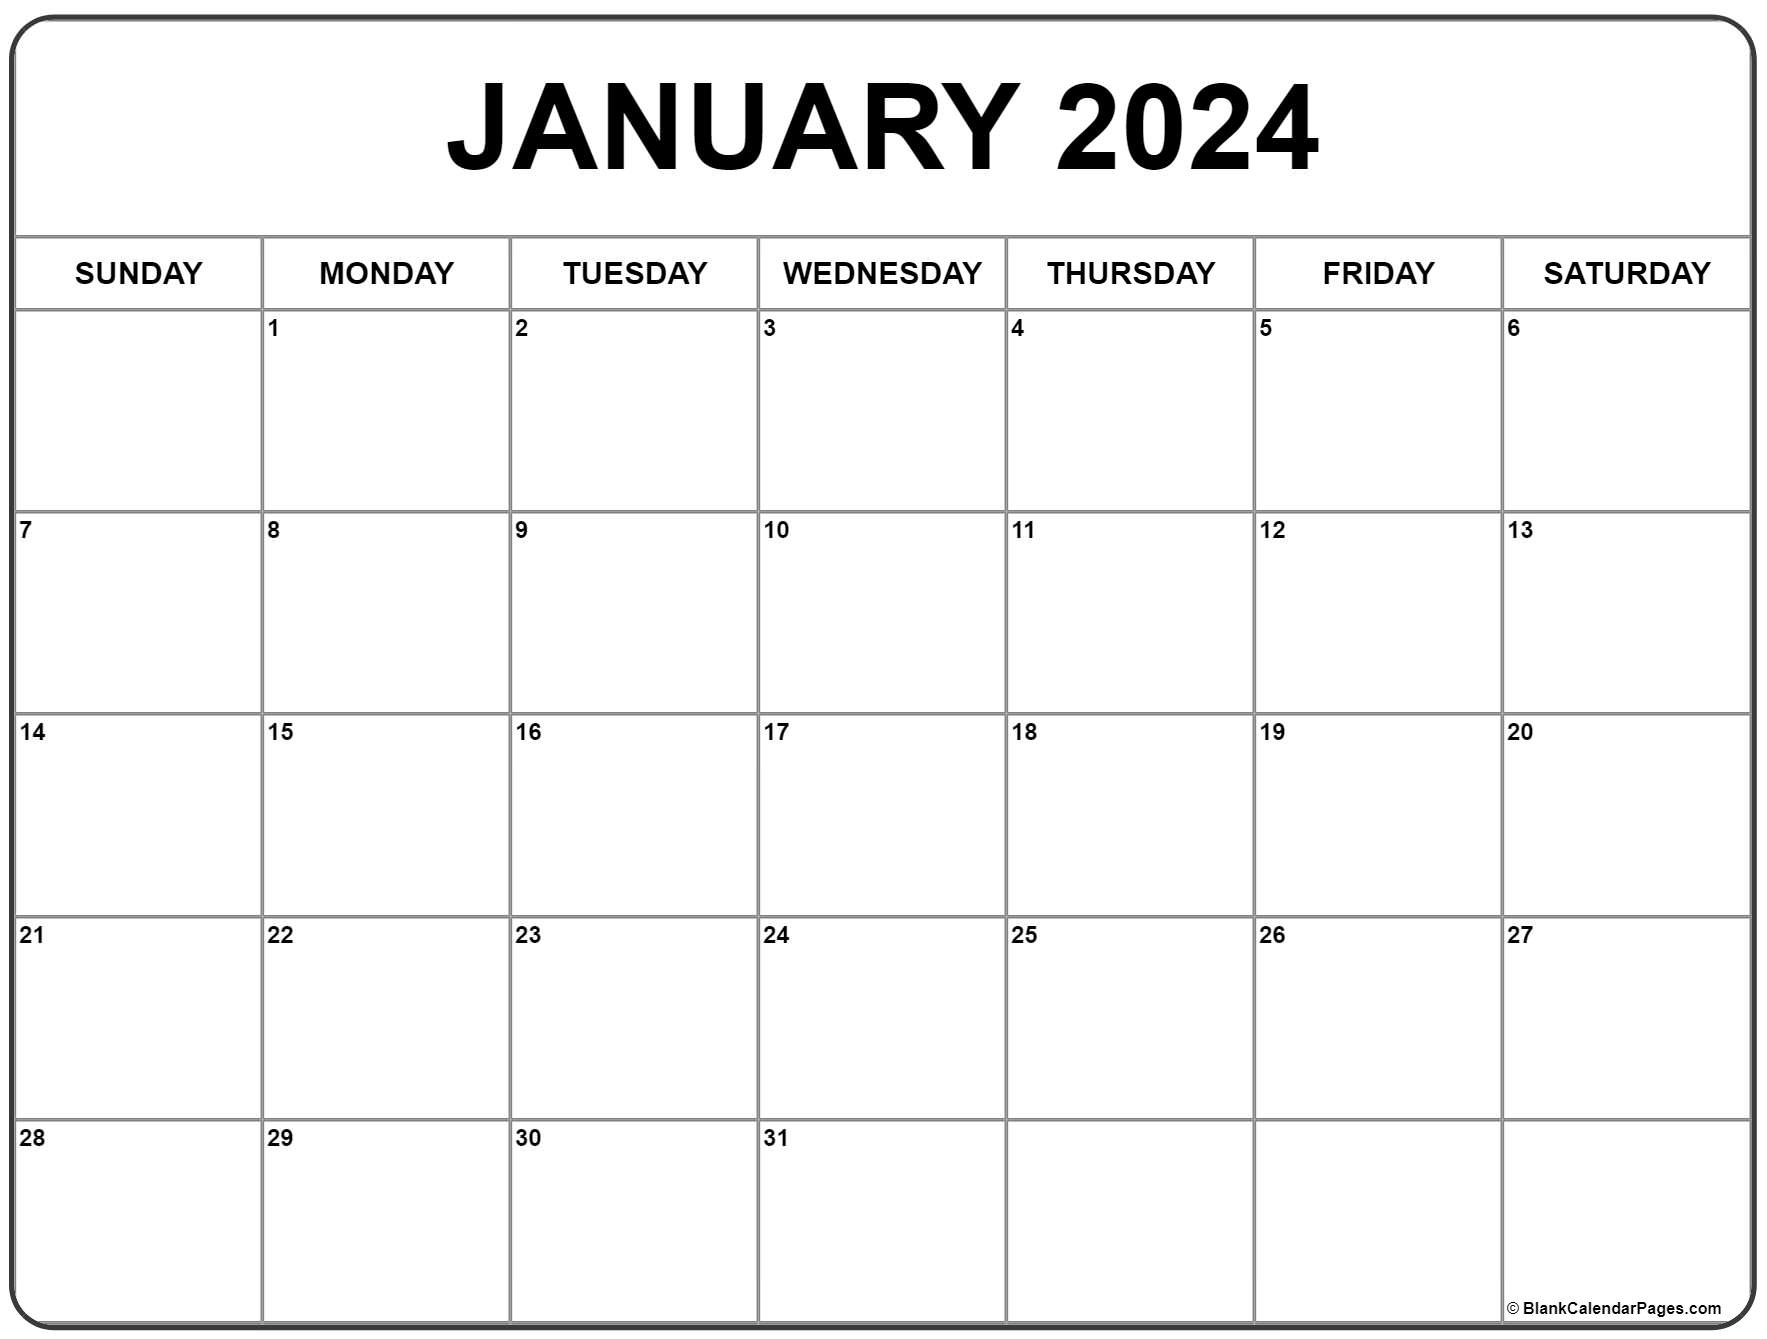 January 2024 Calendar | Free Printable Calendar for 2024 Monthly Calendar Free Printable